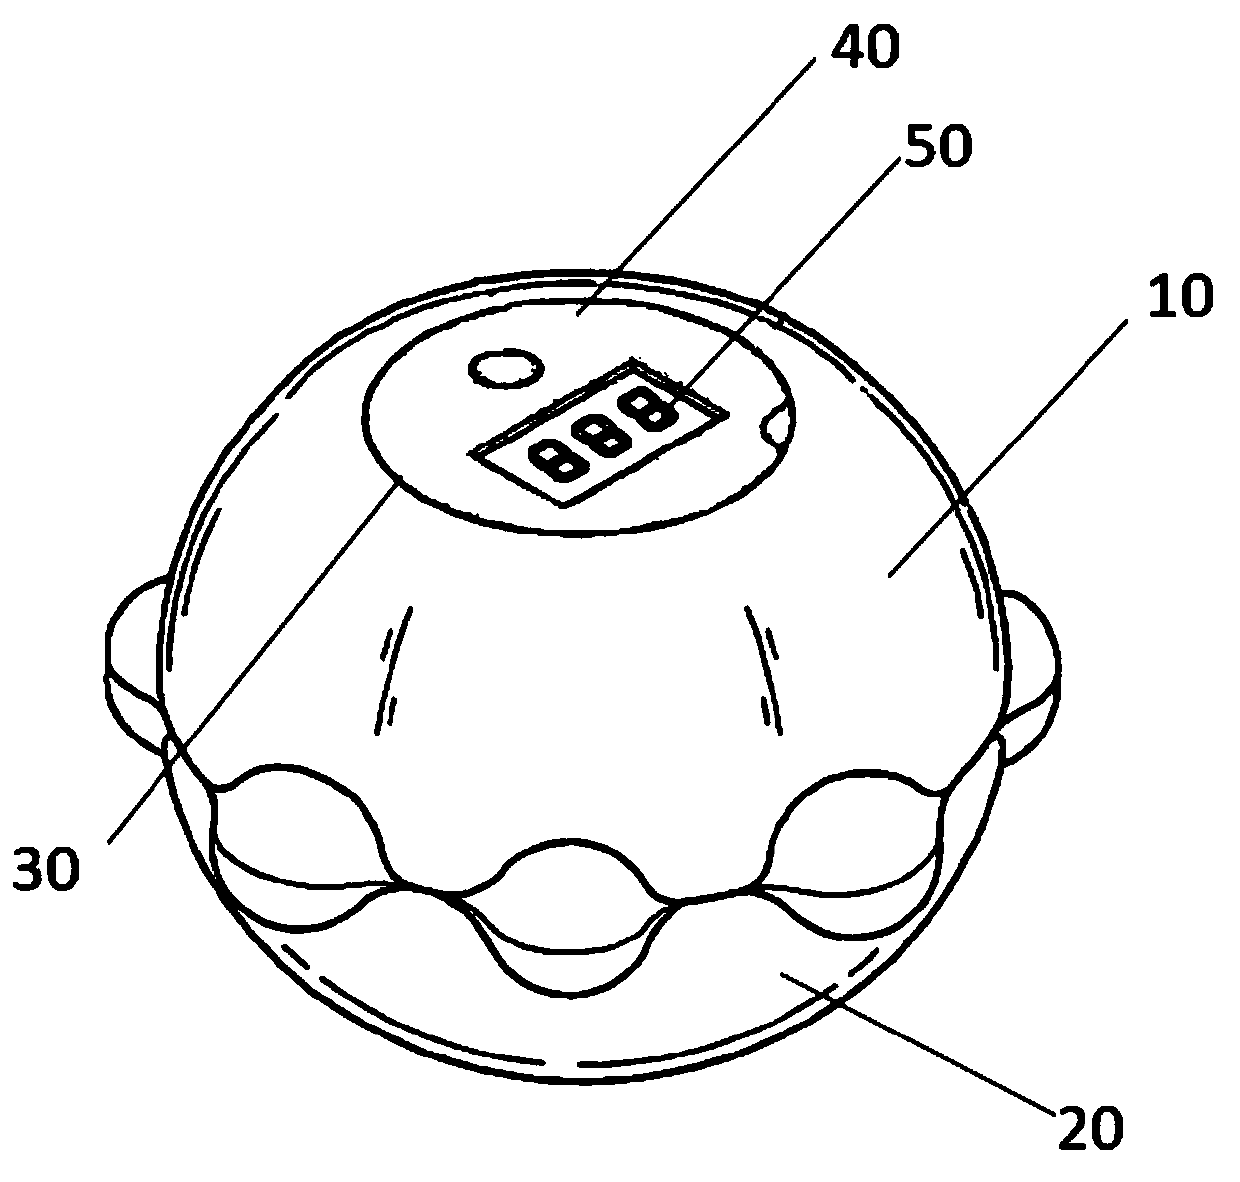 Wireless connection wrist ball